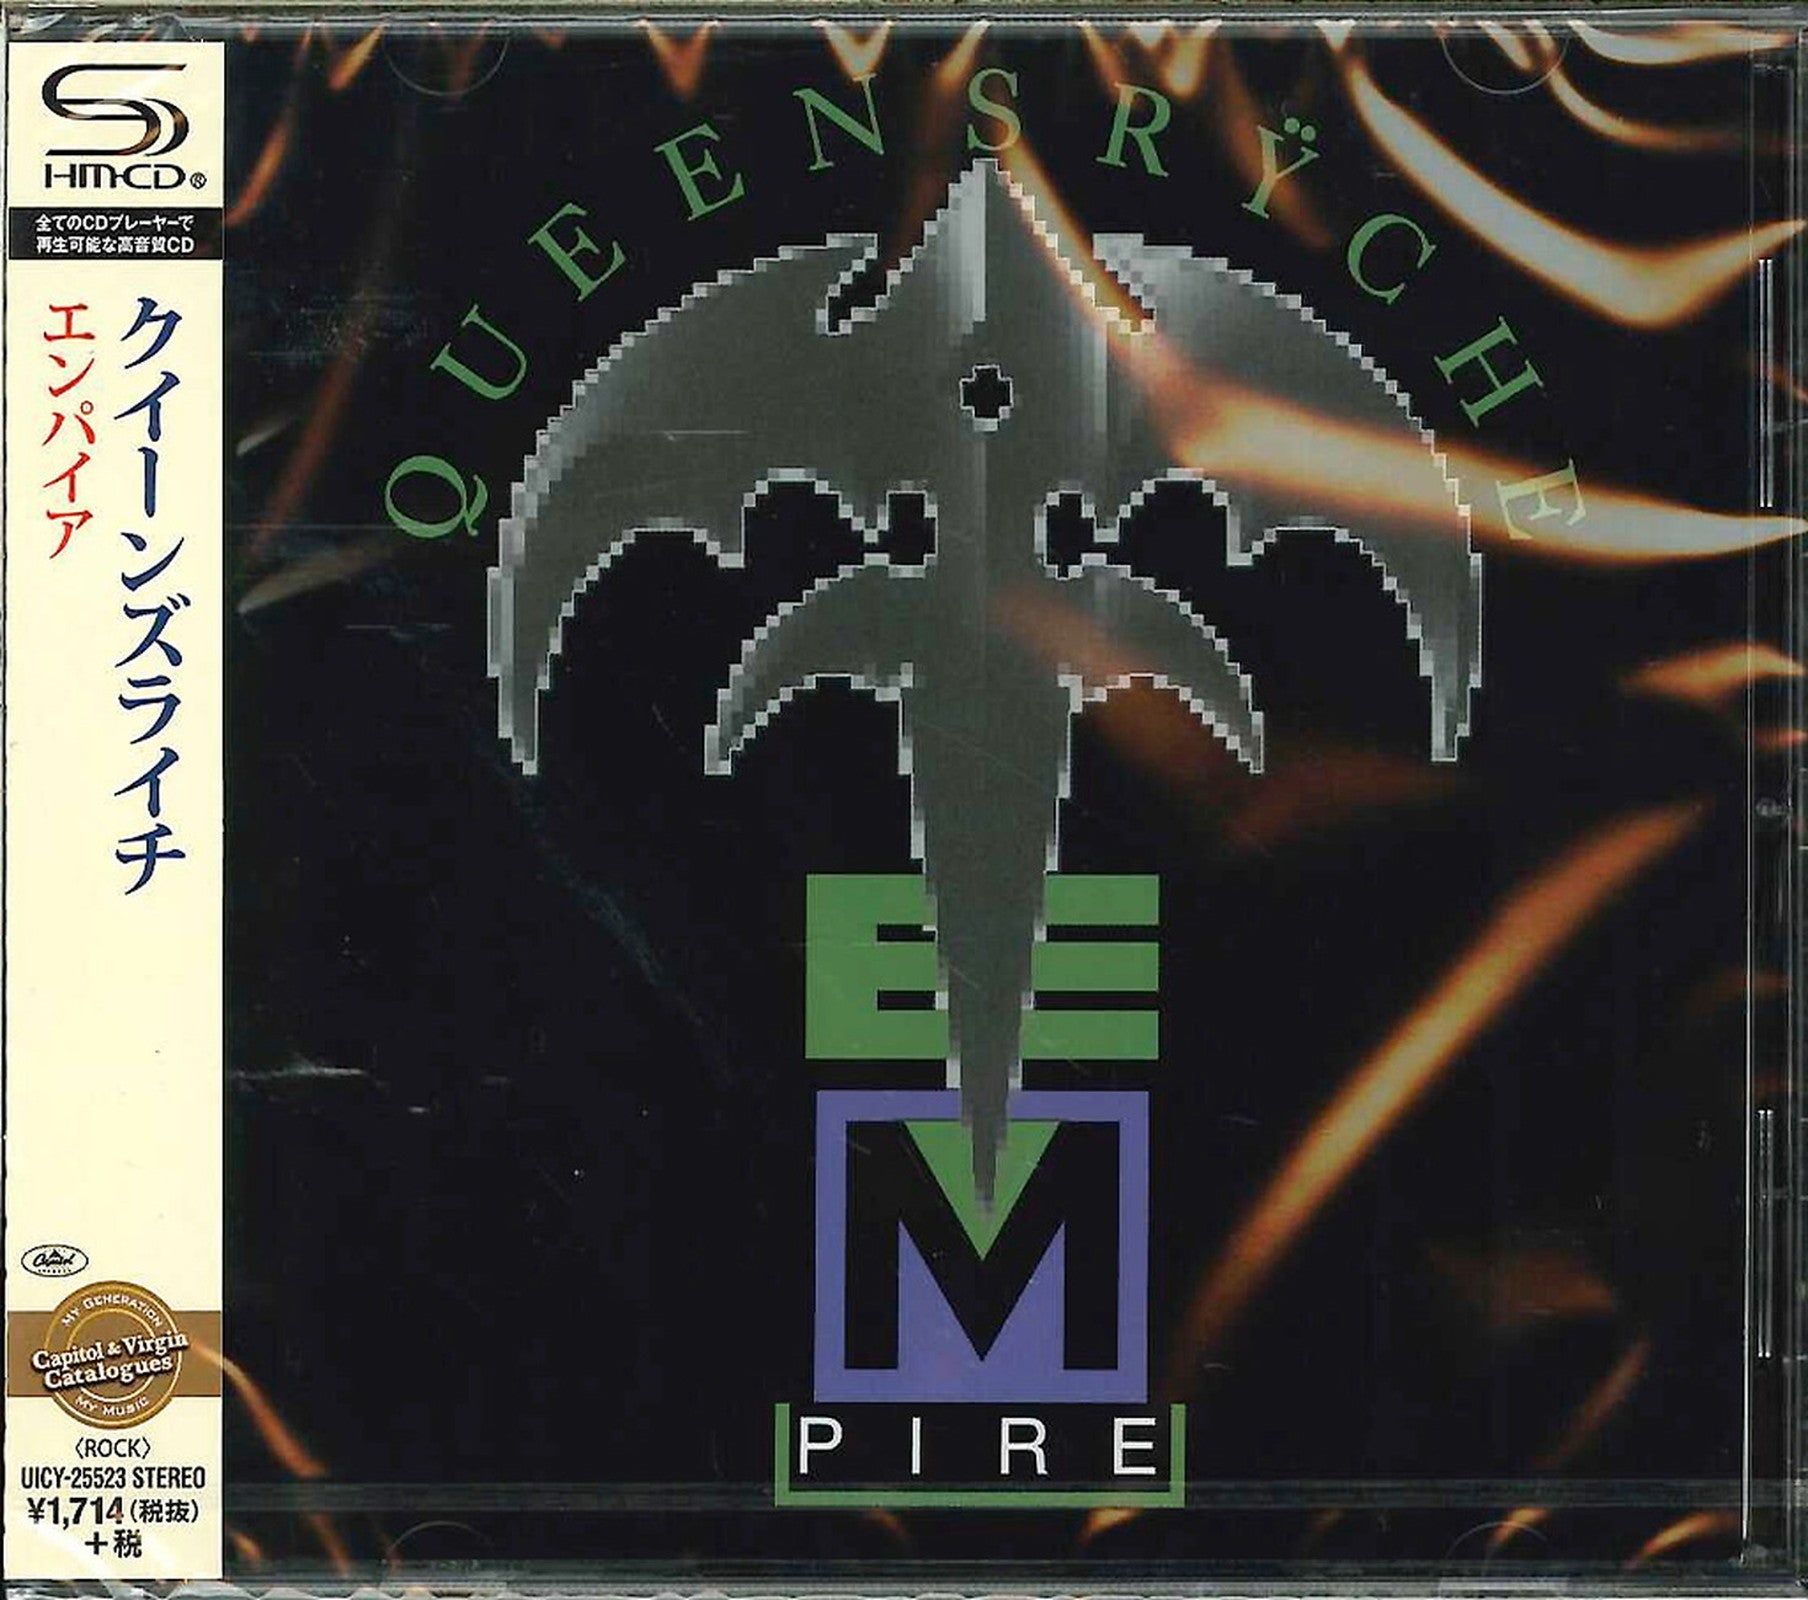 Queensryche - Empire - Japan SHM-CD Bonus Track – CDs Vinyl Japan 